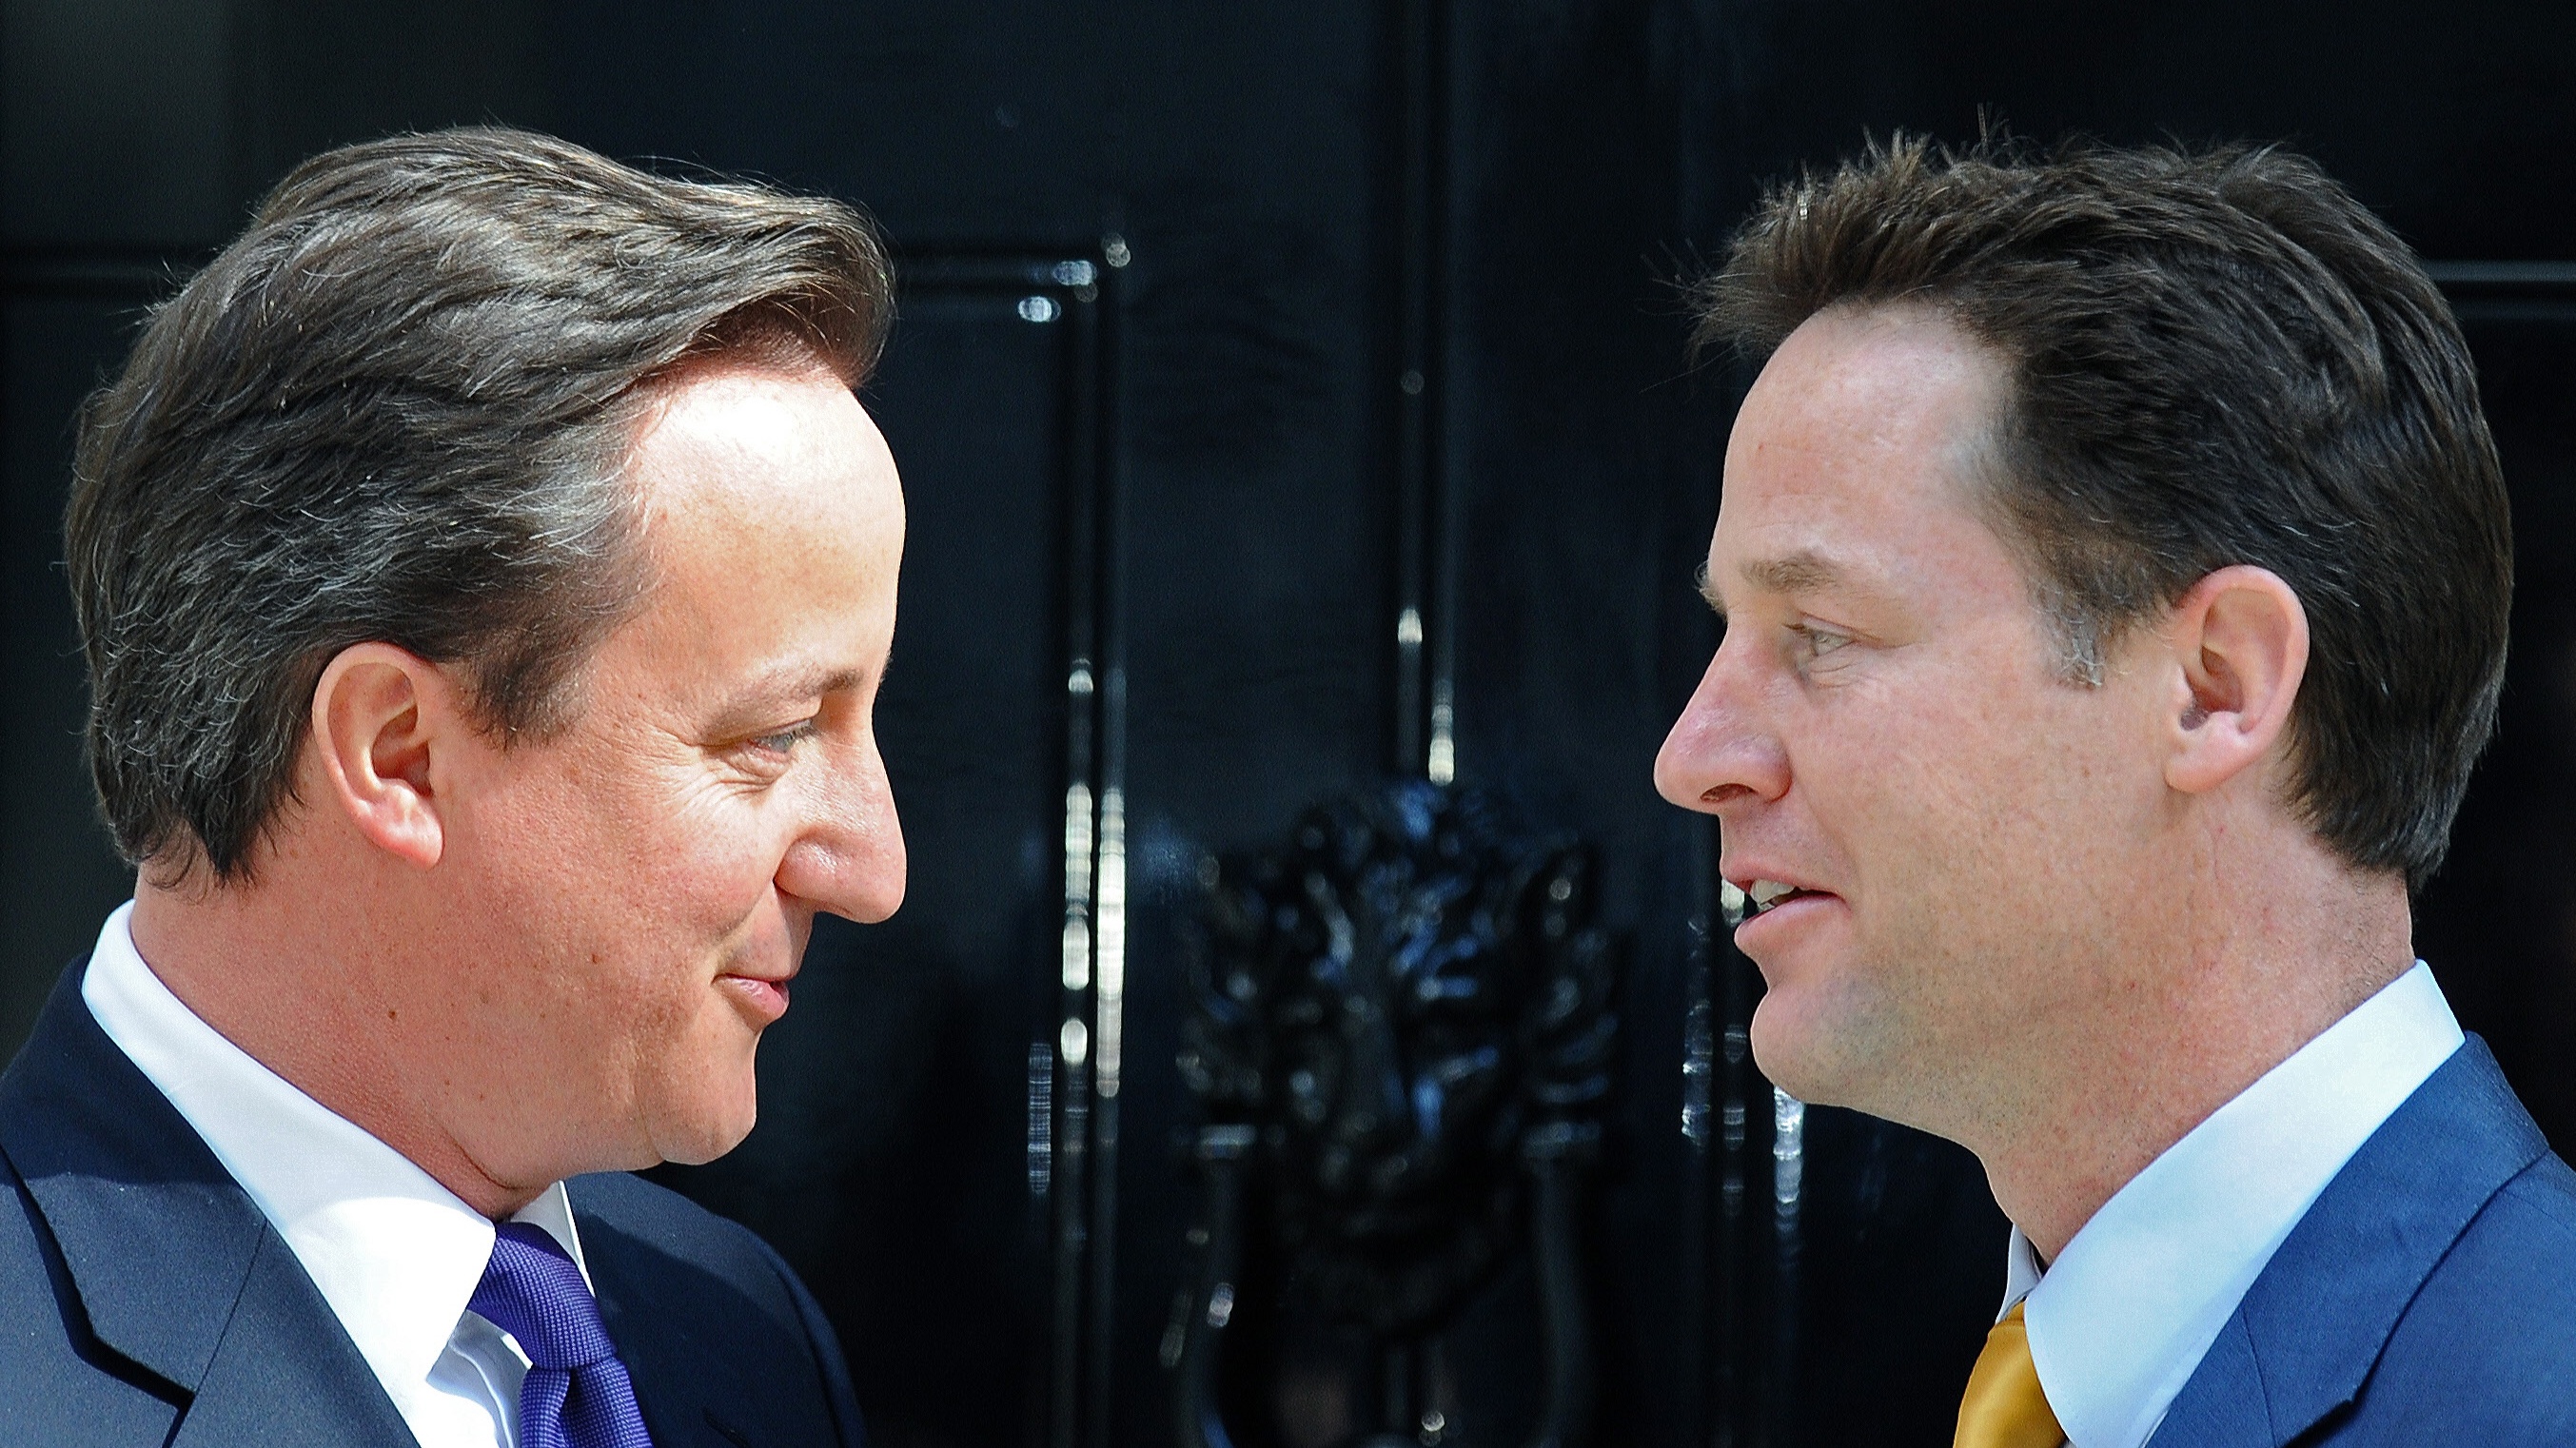 Conservative PM David Cameron and Liberal Democrat Deputy PM Nick Clegg